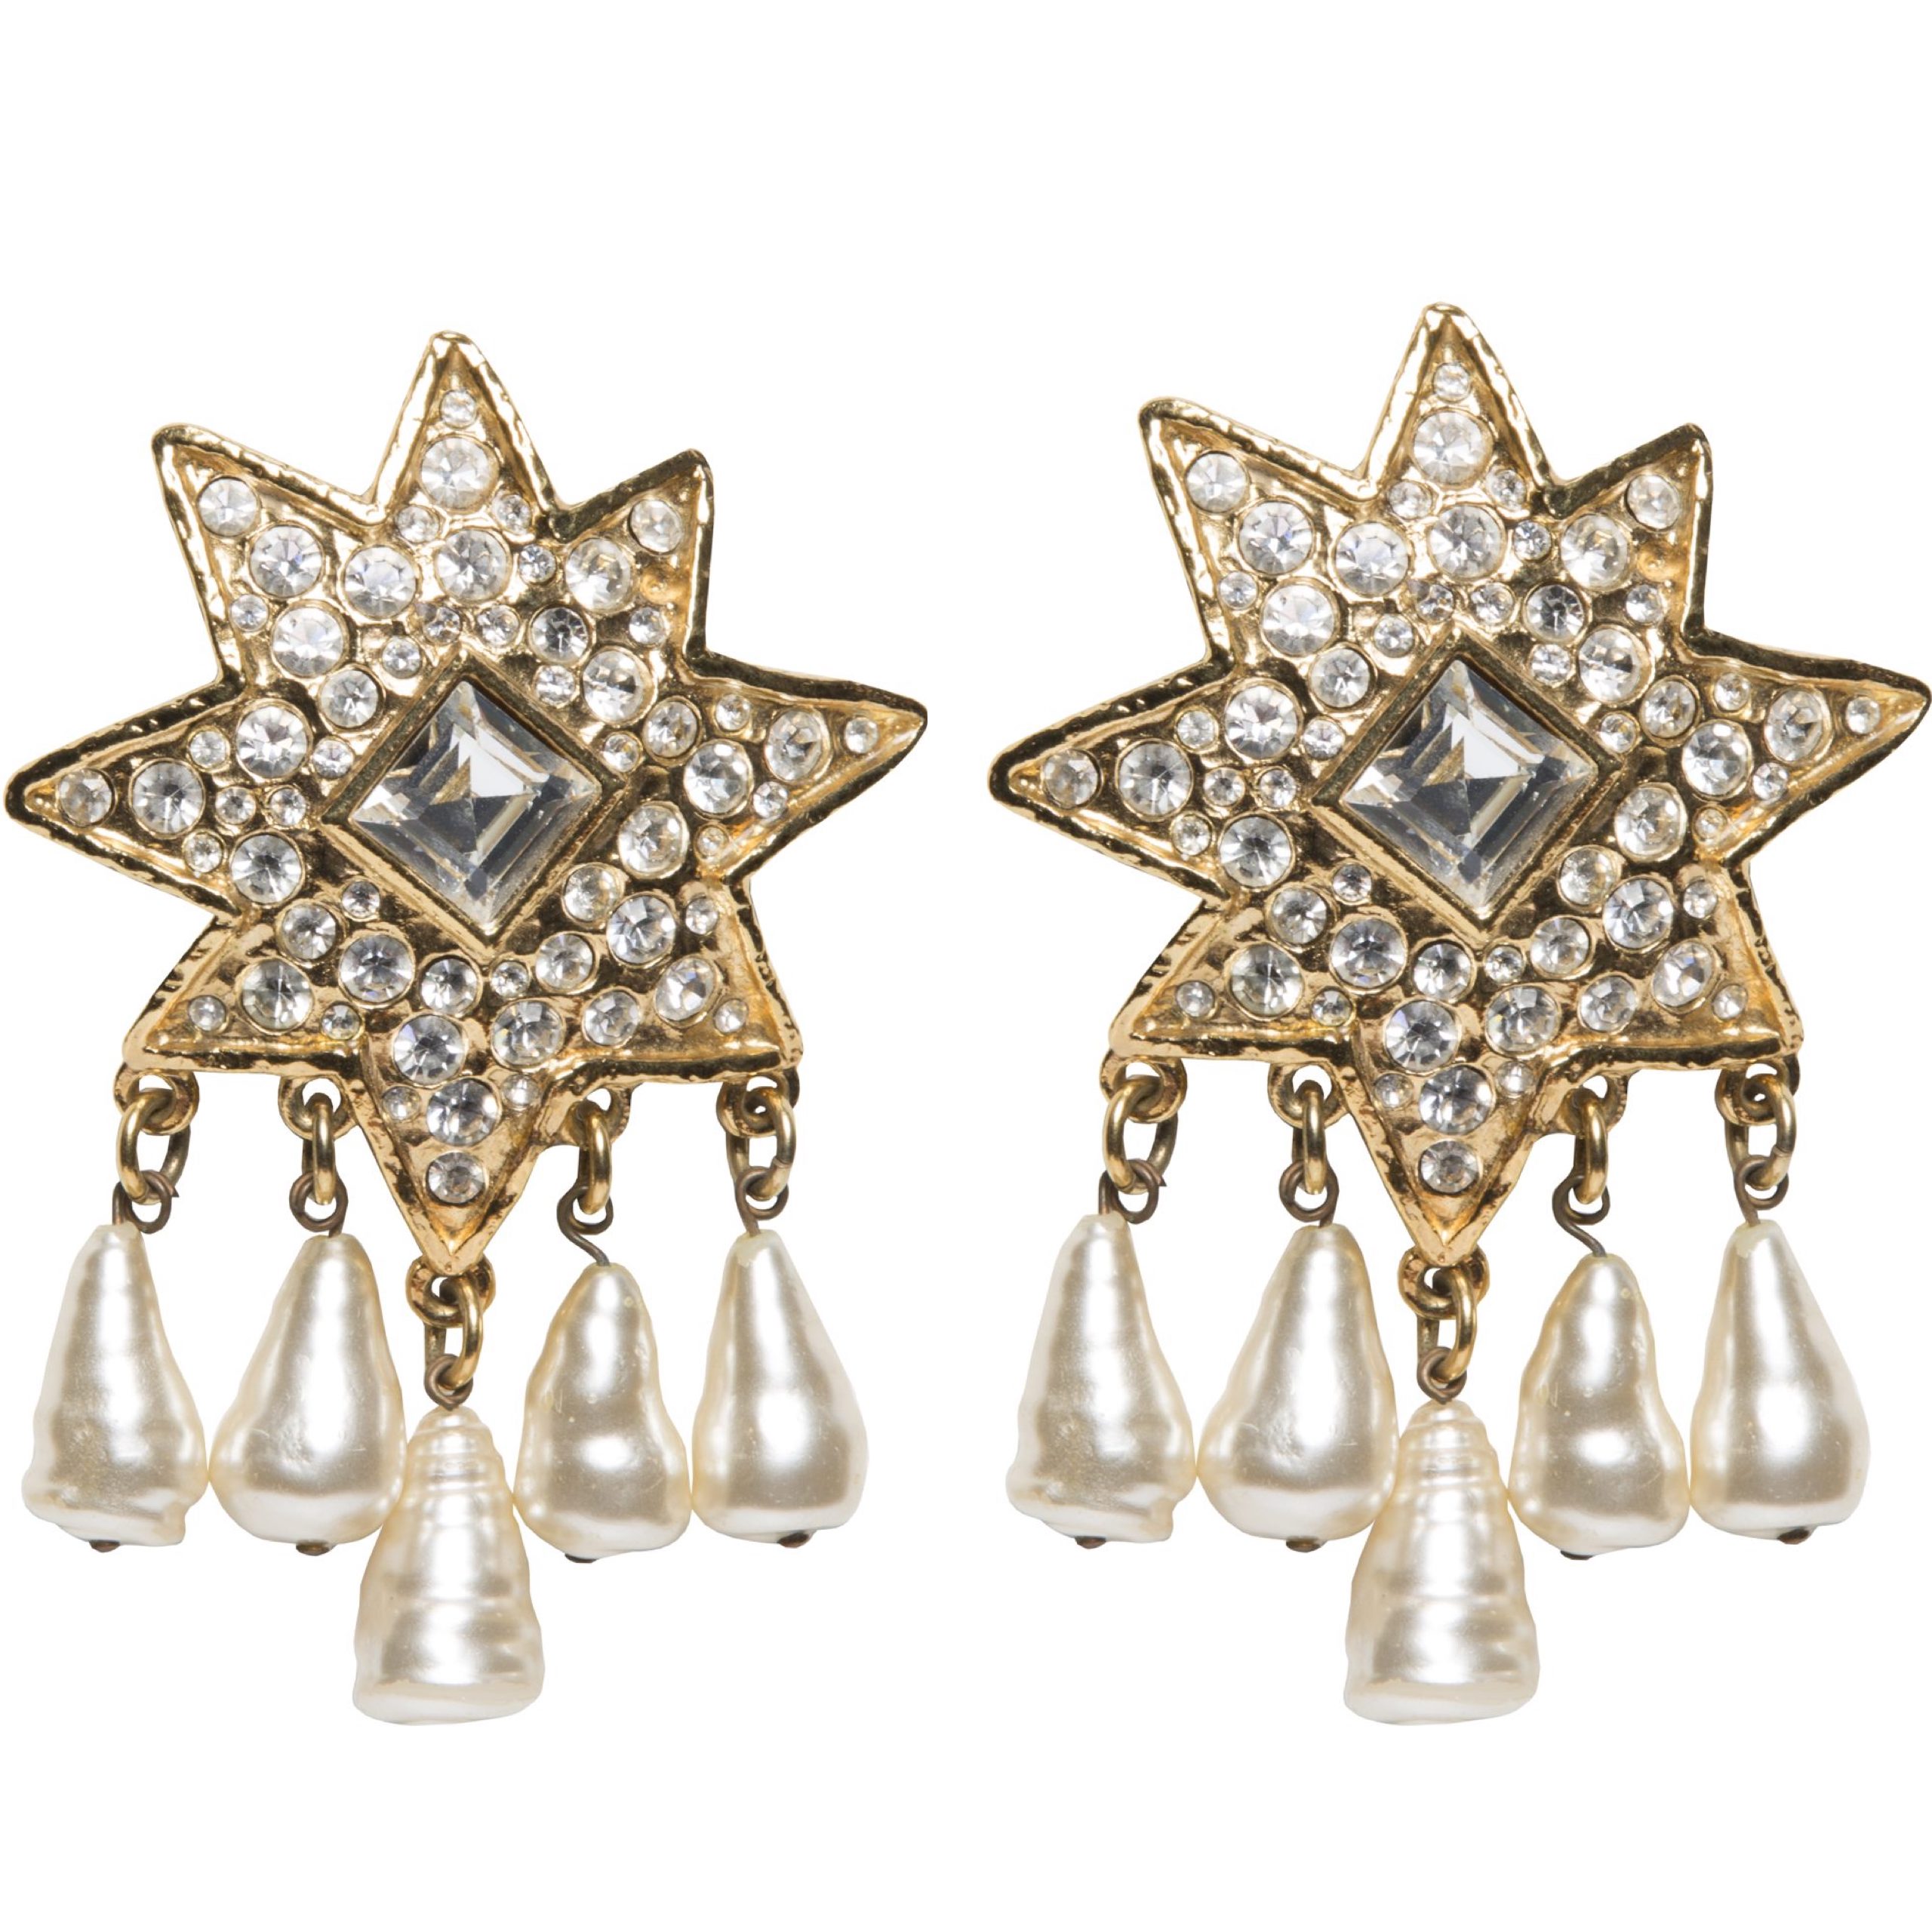 Vintage haute couture massive star earrings